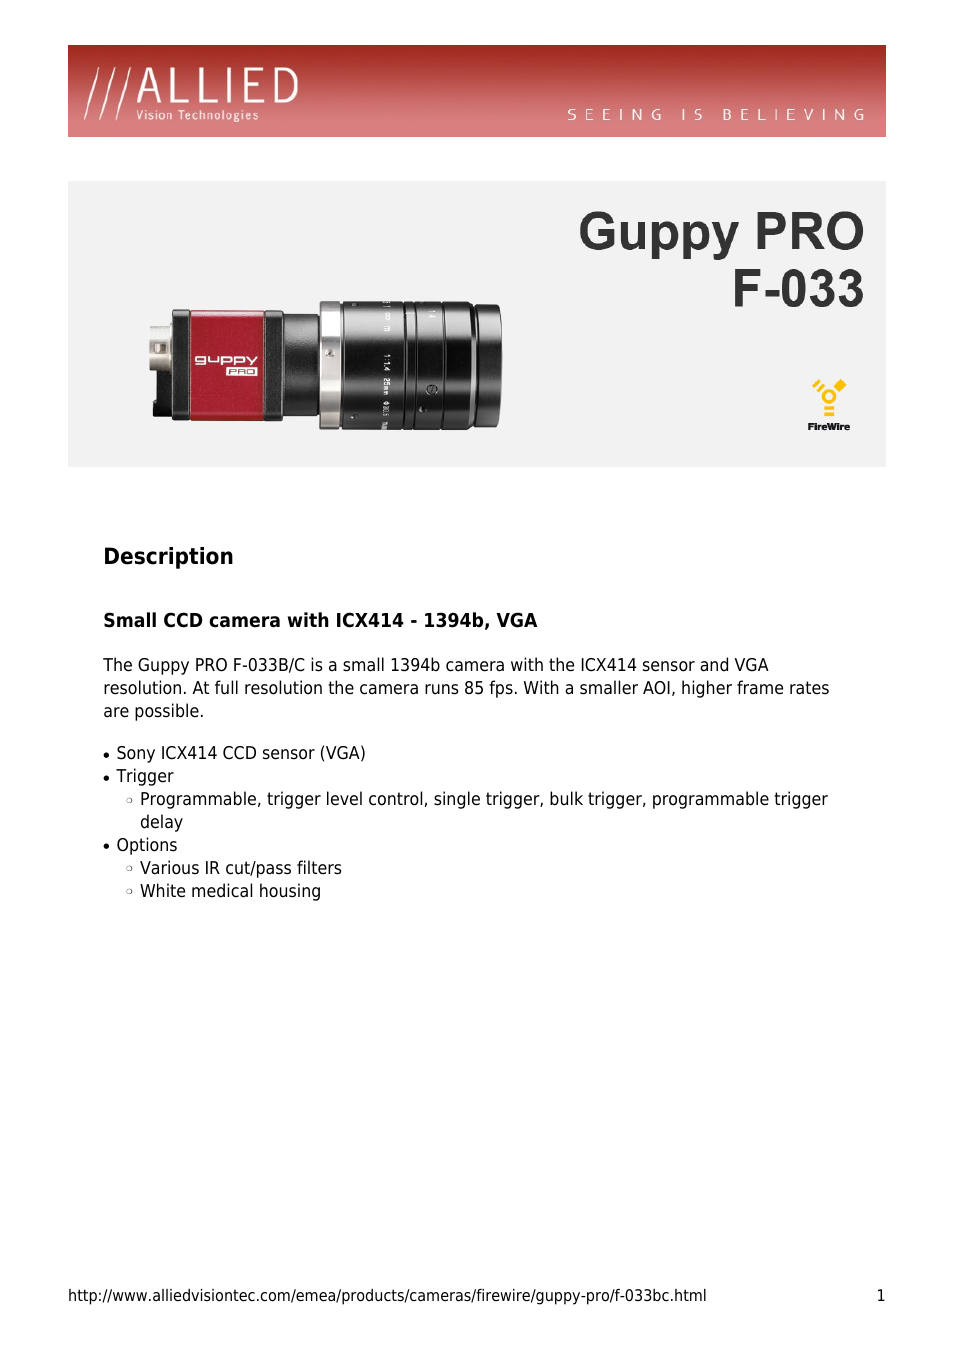 Guppy PRO F-033